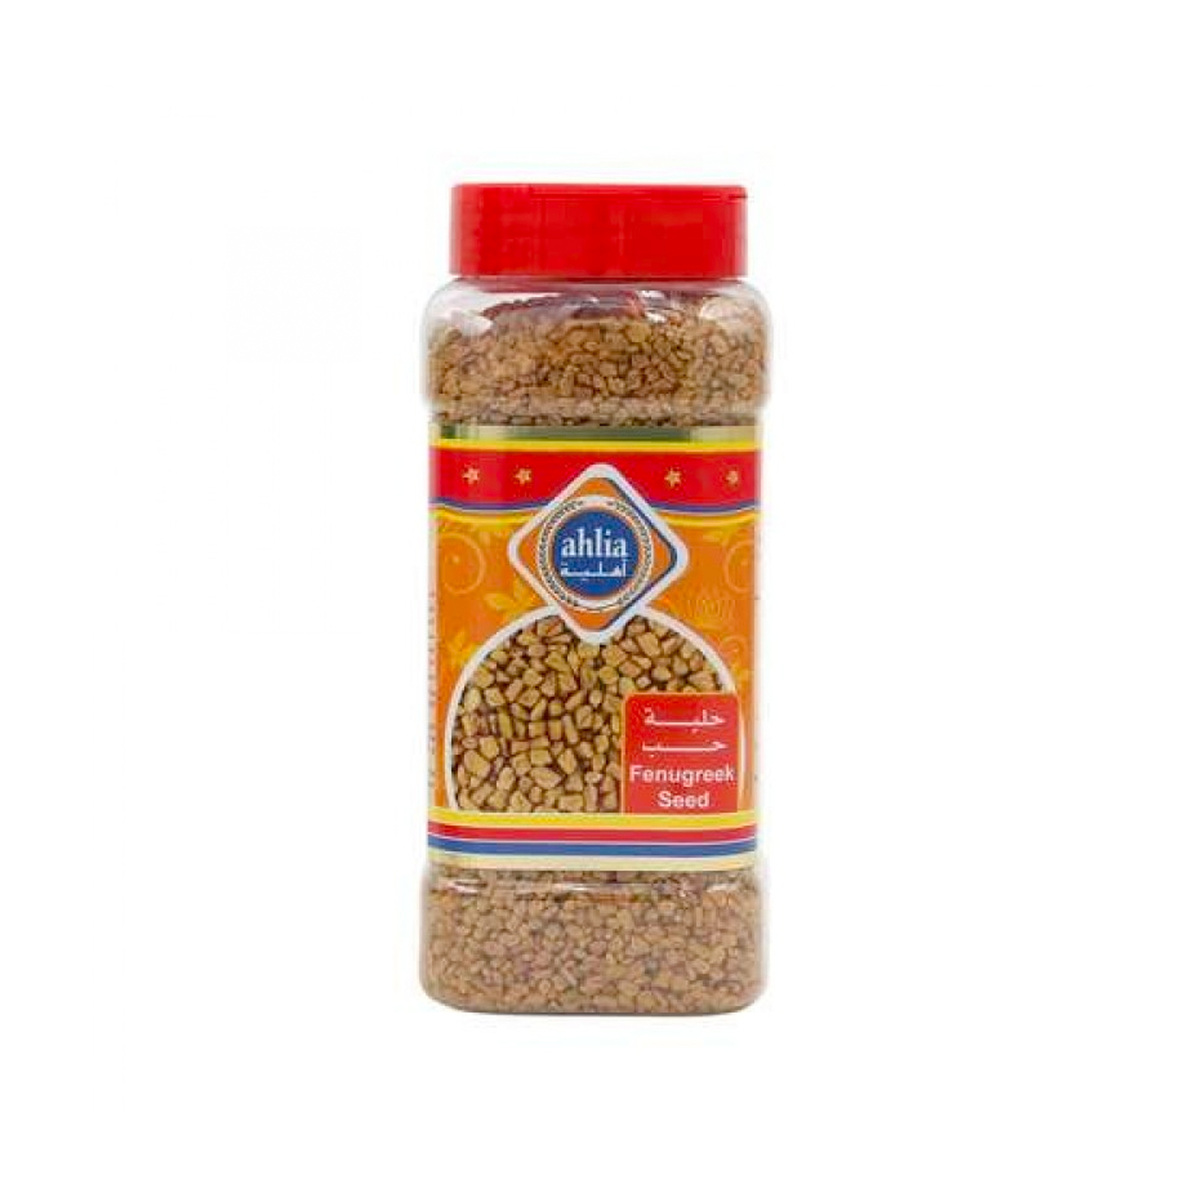 Ahlia Fenugreek Seeds Value Pack 350 g